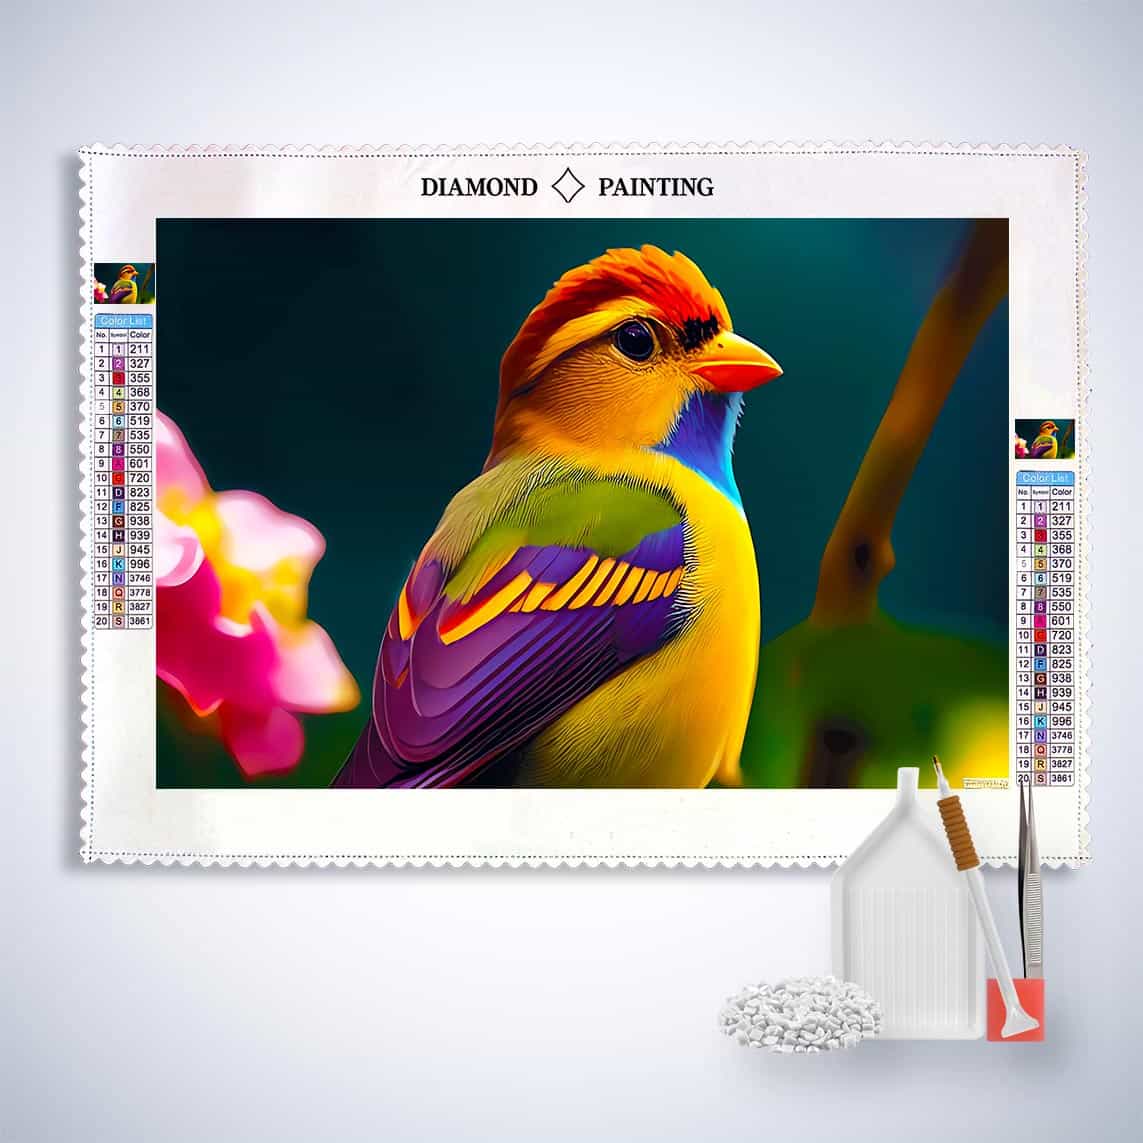 Diamond Painting - Bunter Vogel mit Irokesenschnitt - gedruckt in Ultra-HD - Horizontal, Tiere, Vögel